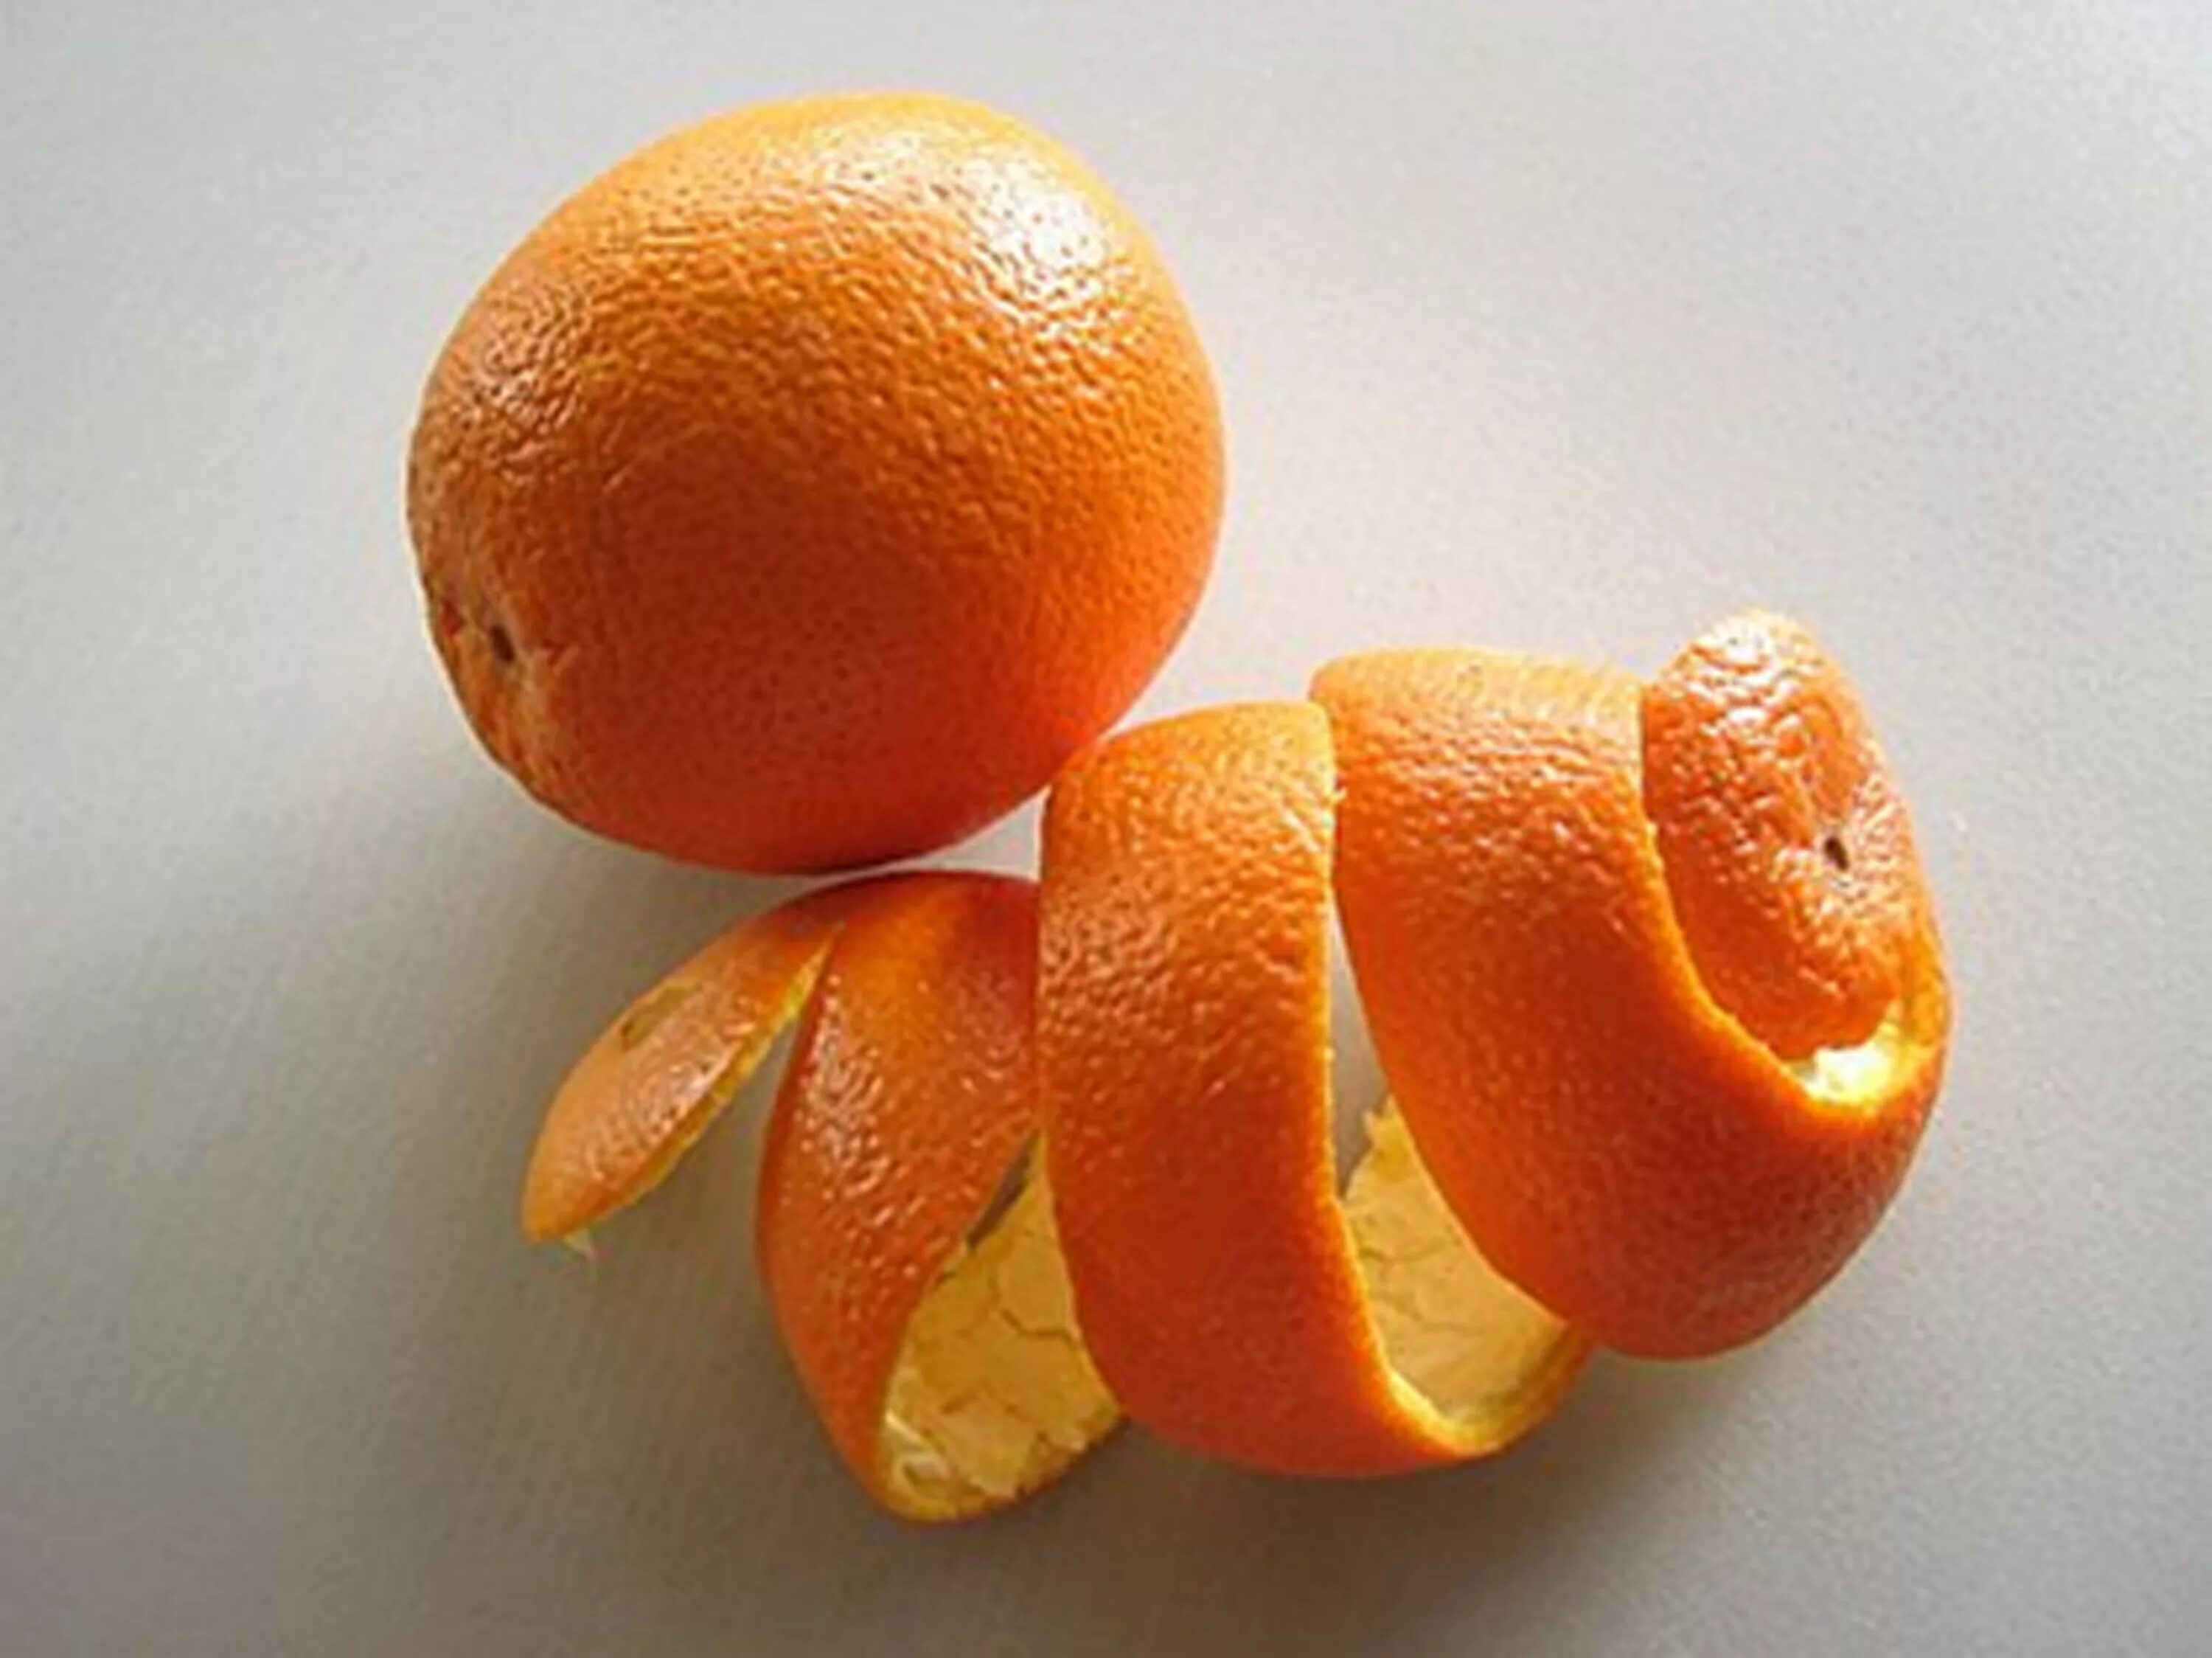 Кожура Орендж. Апельсиновая кожура. Апельсиновая корка. Цедра апельсина. Сухие корки мандаринов